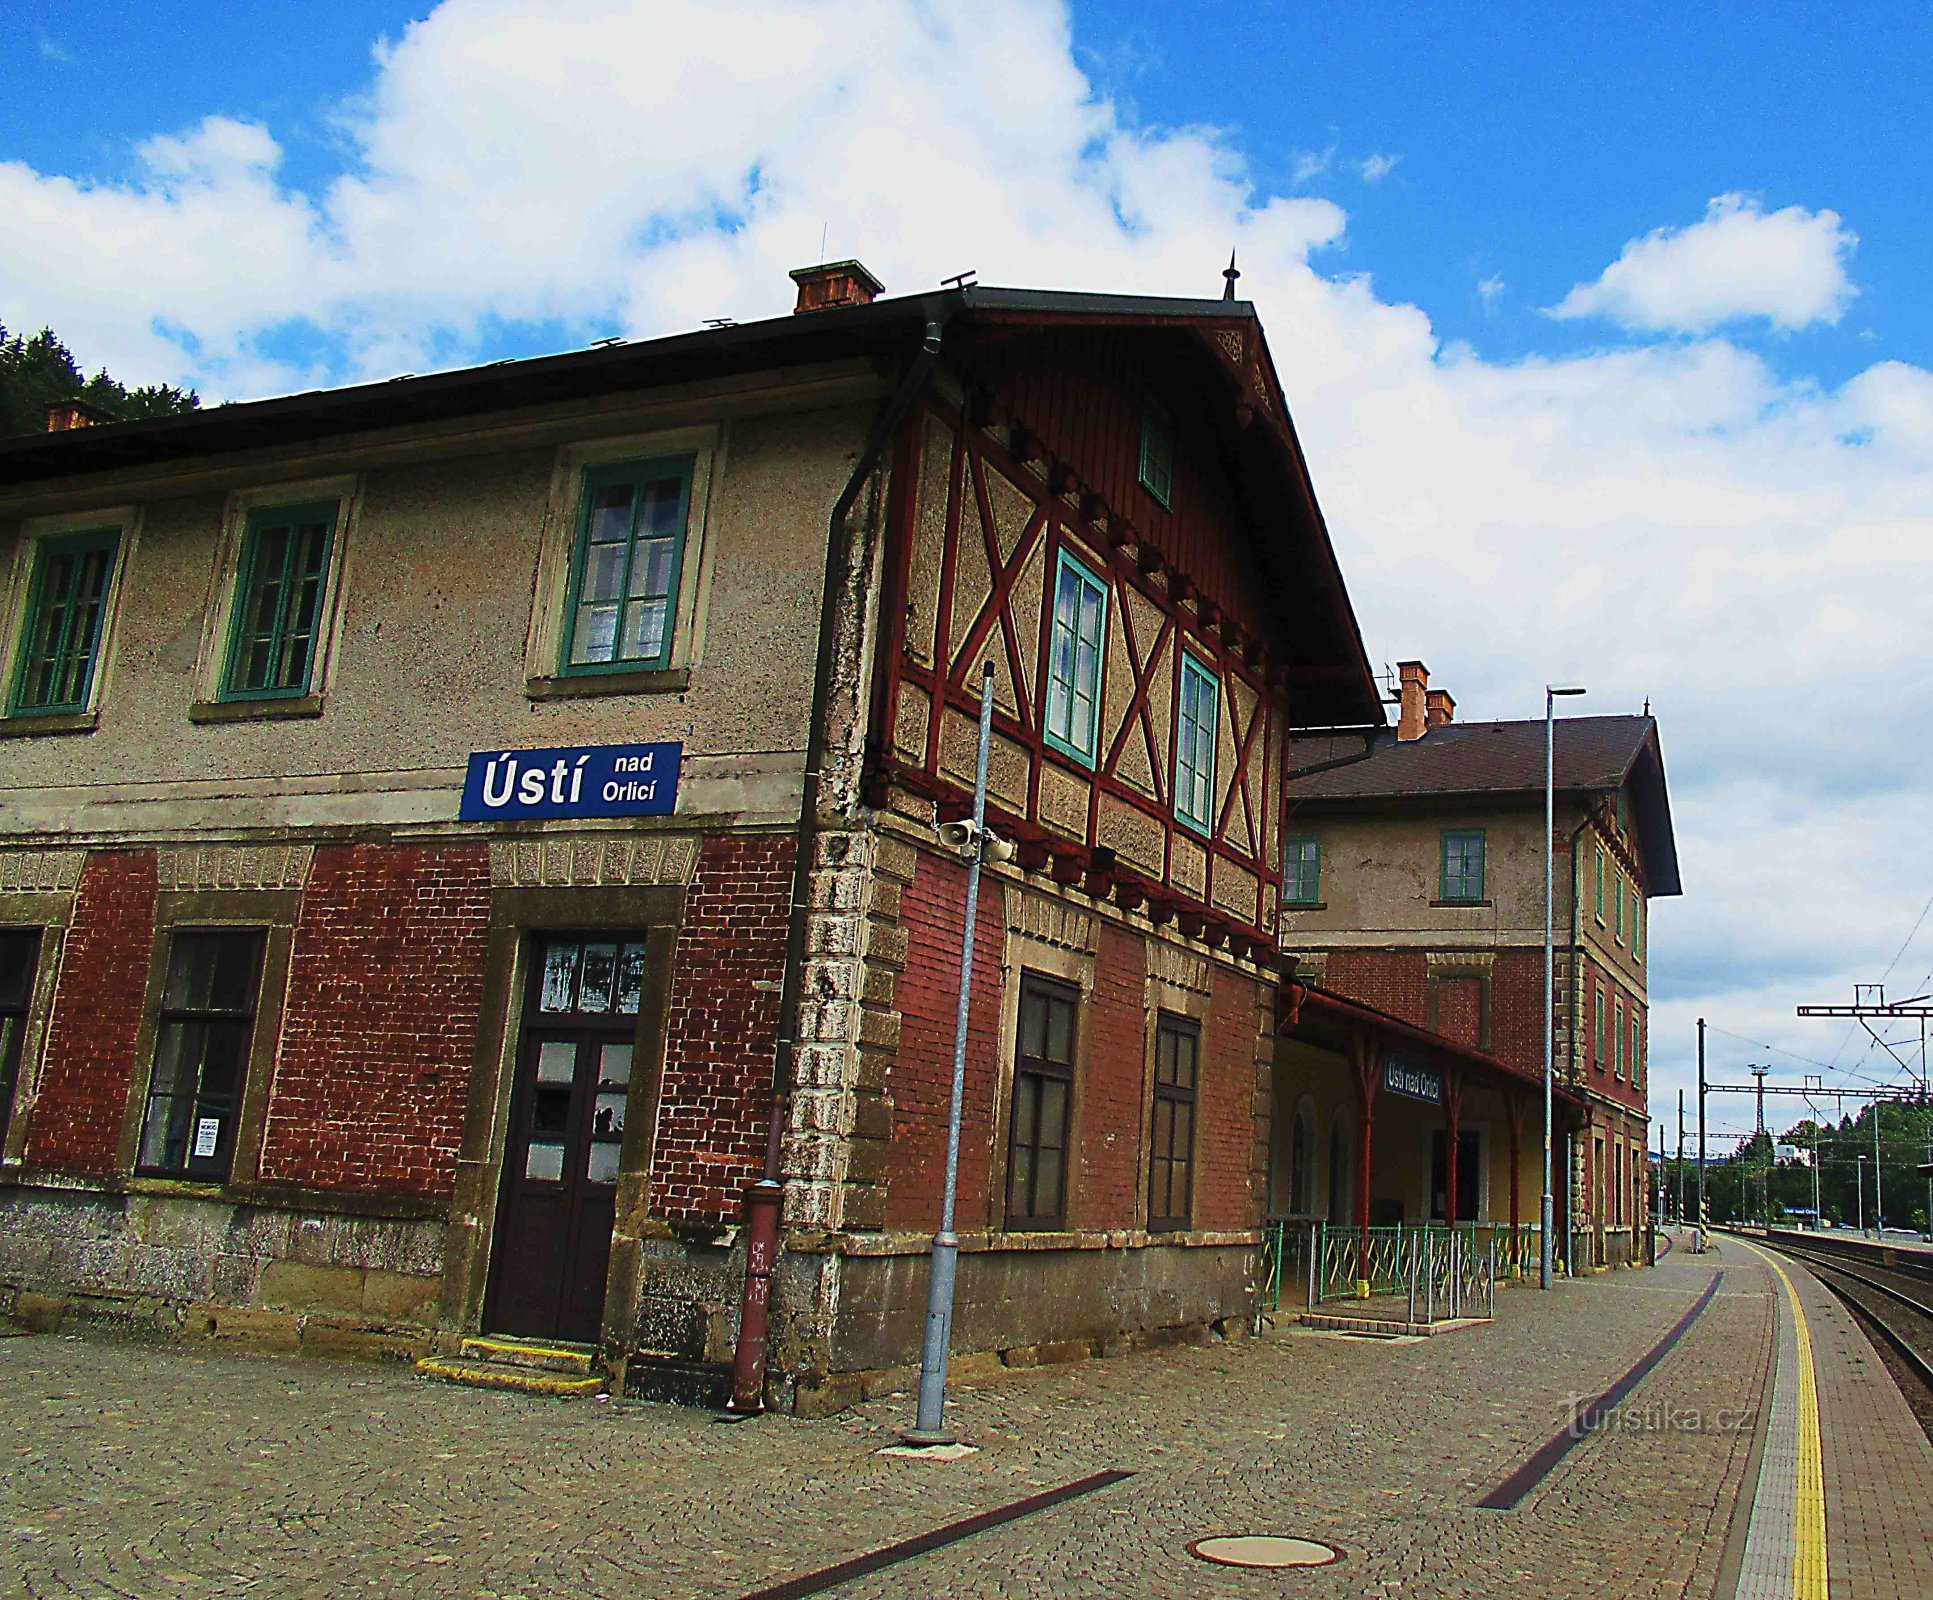 Historic building of the railway station in Ústí nad Orlicí